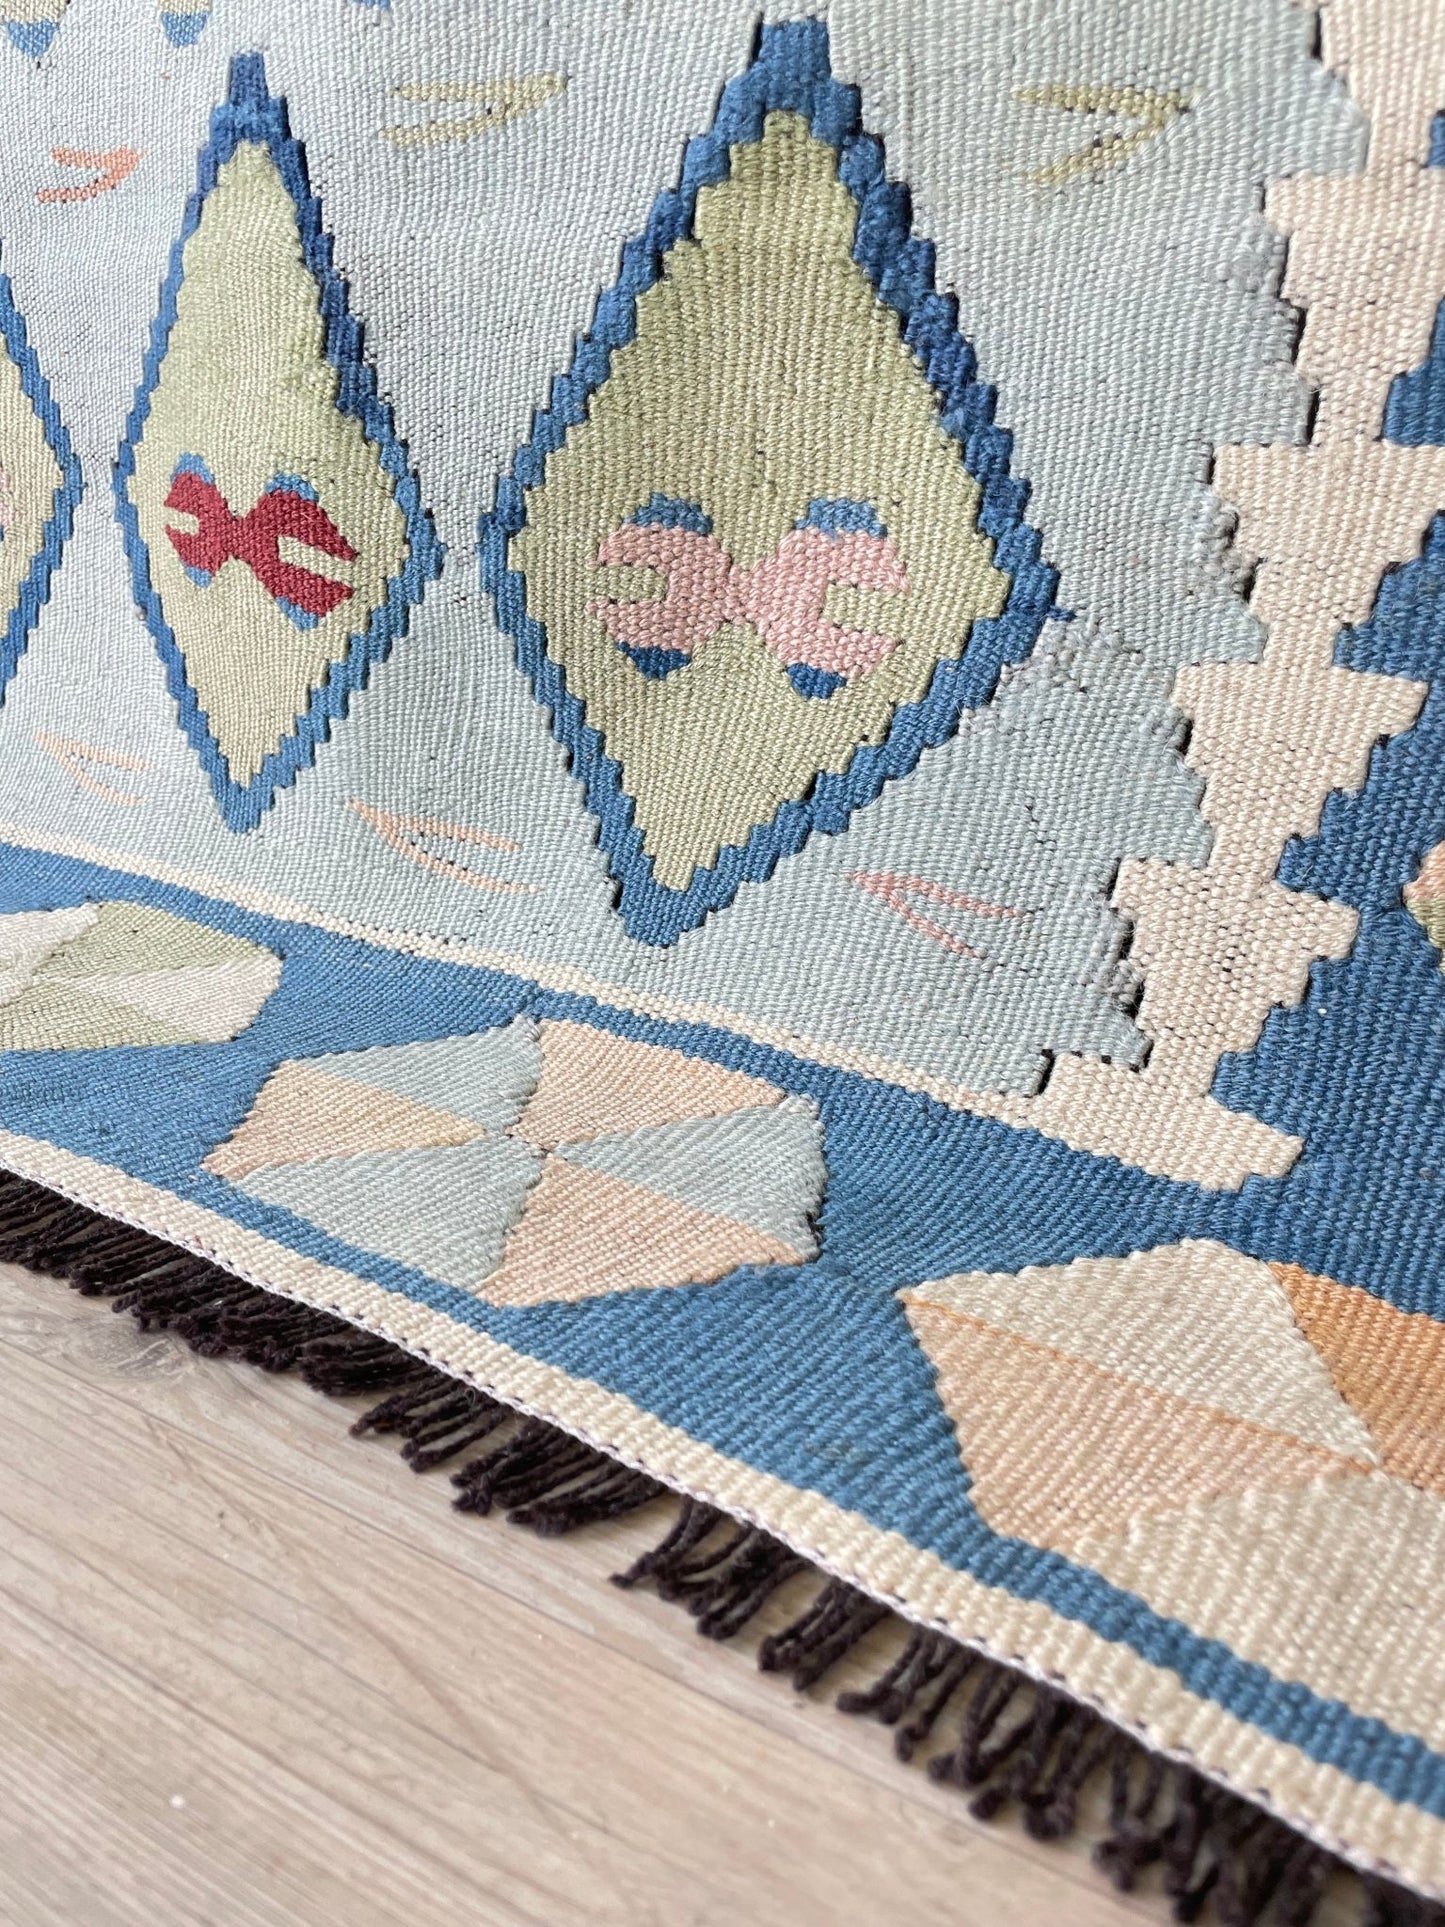 Kayseri small vintage turkish kilim rug shop san francisco bay area. Buy handmade wool Oriental rug online